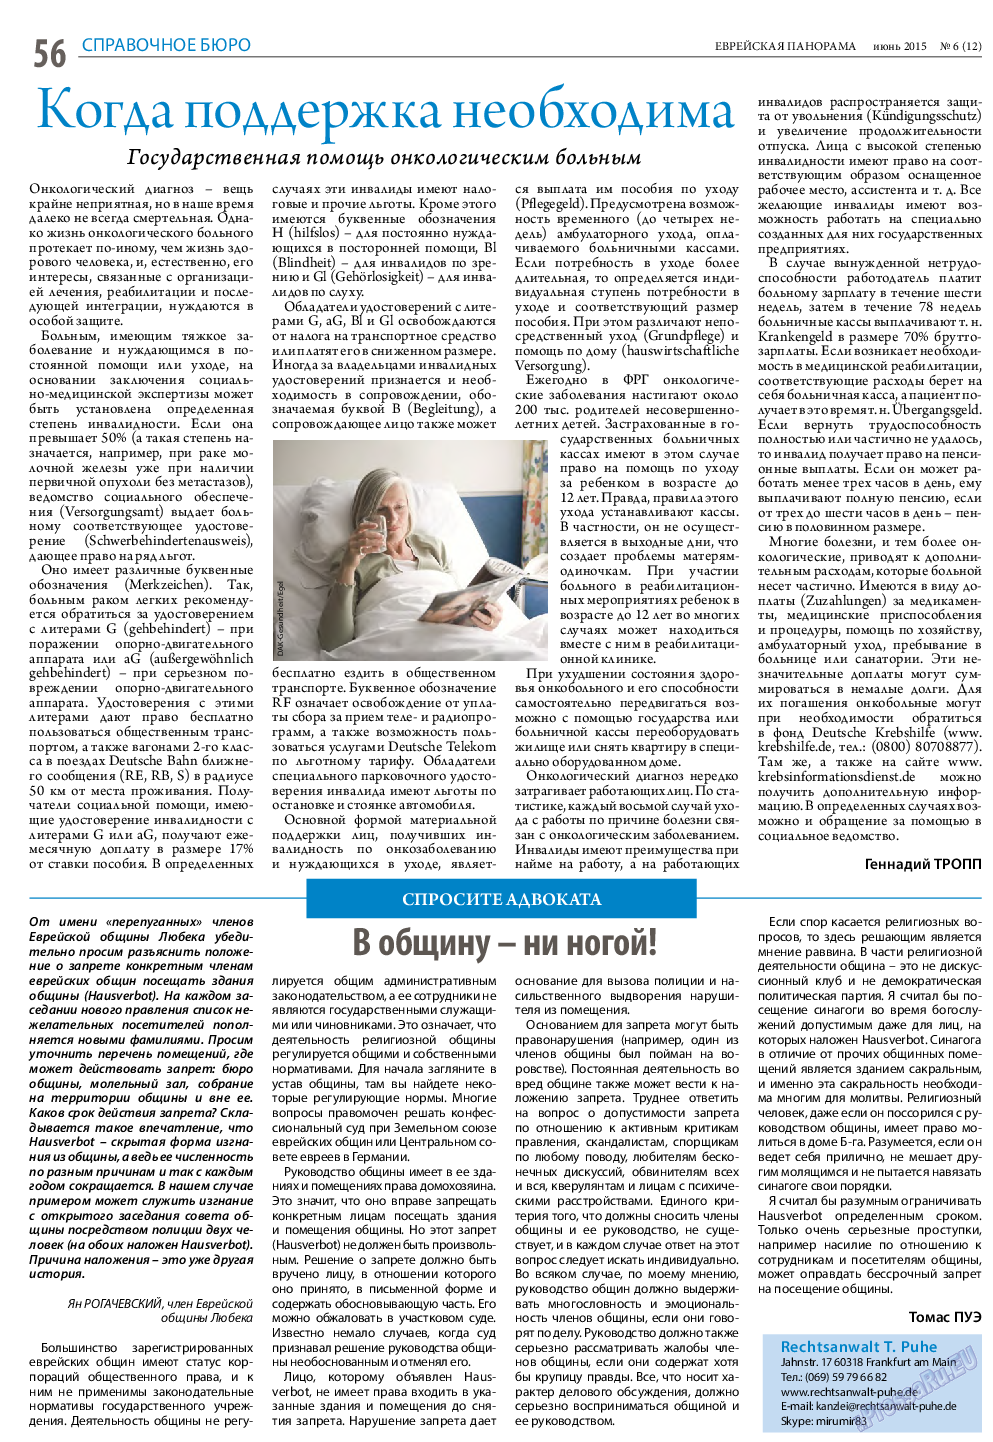 Еврейская панорама, газета. 2015 №6 стр.56